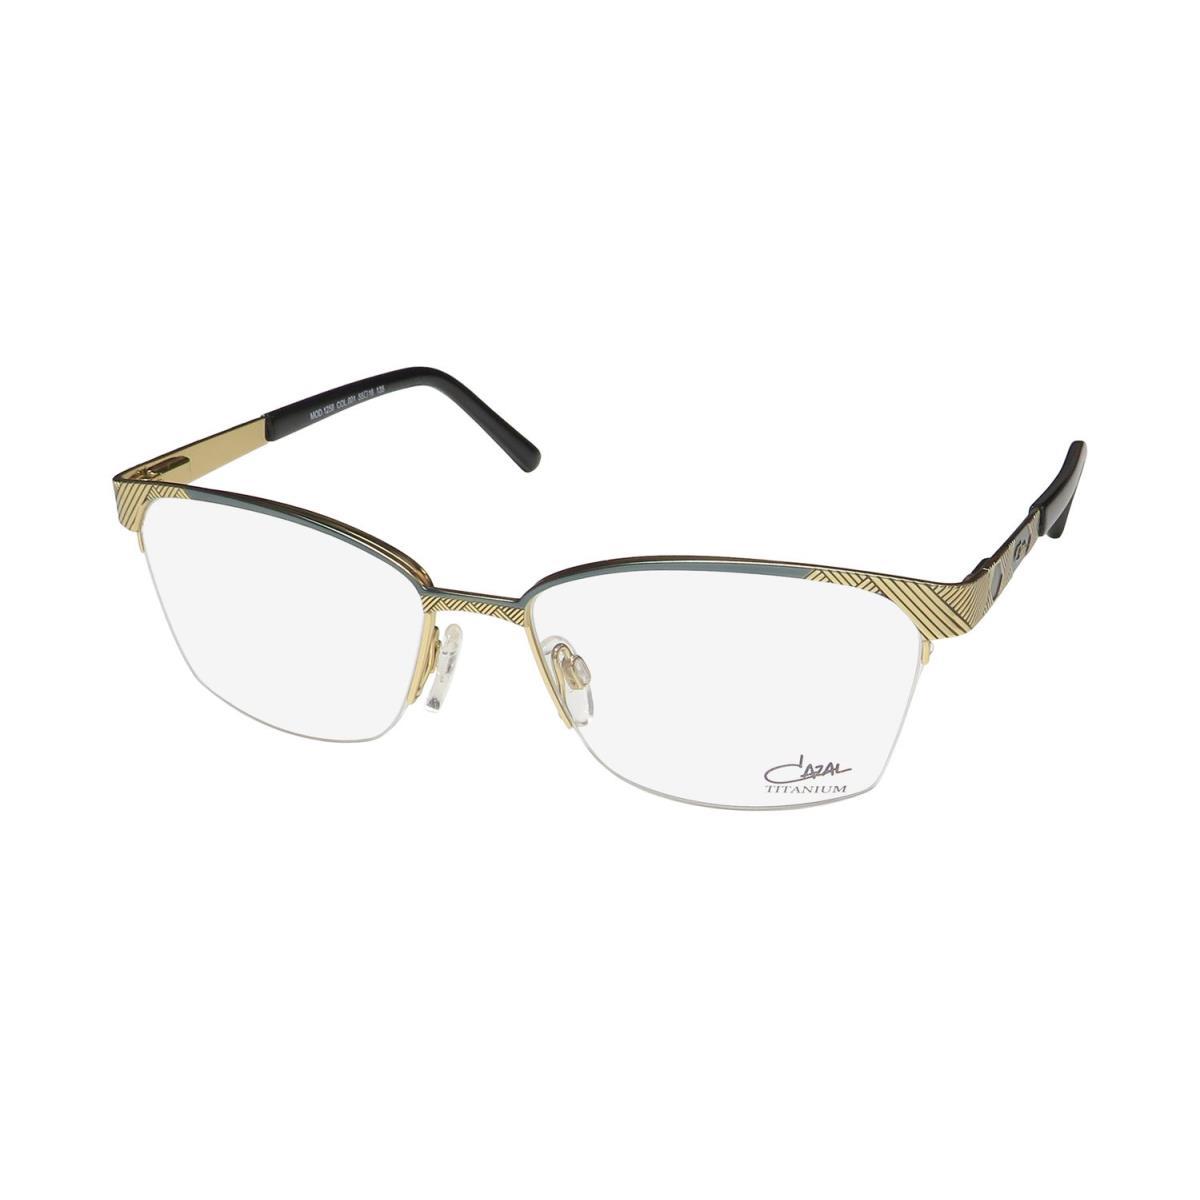 Cazal 1258 Titanium Semi-rimless Made IN Germany Designer Eyeglass Frame/glasses Gold / Green